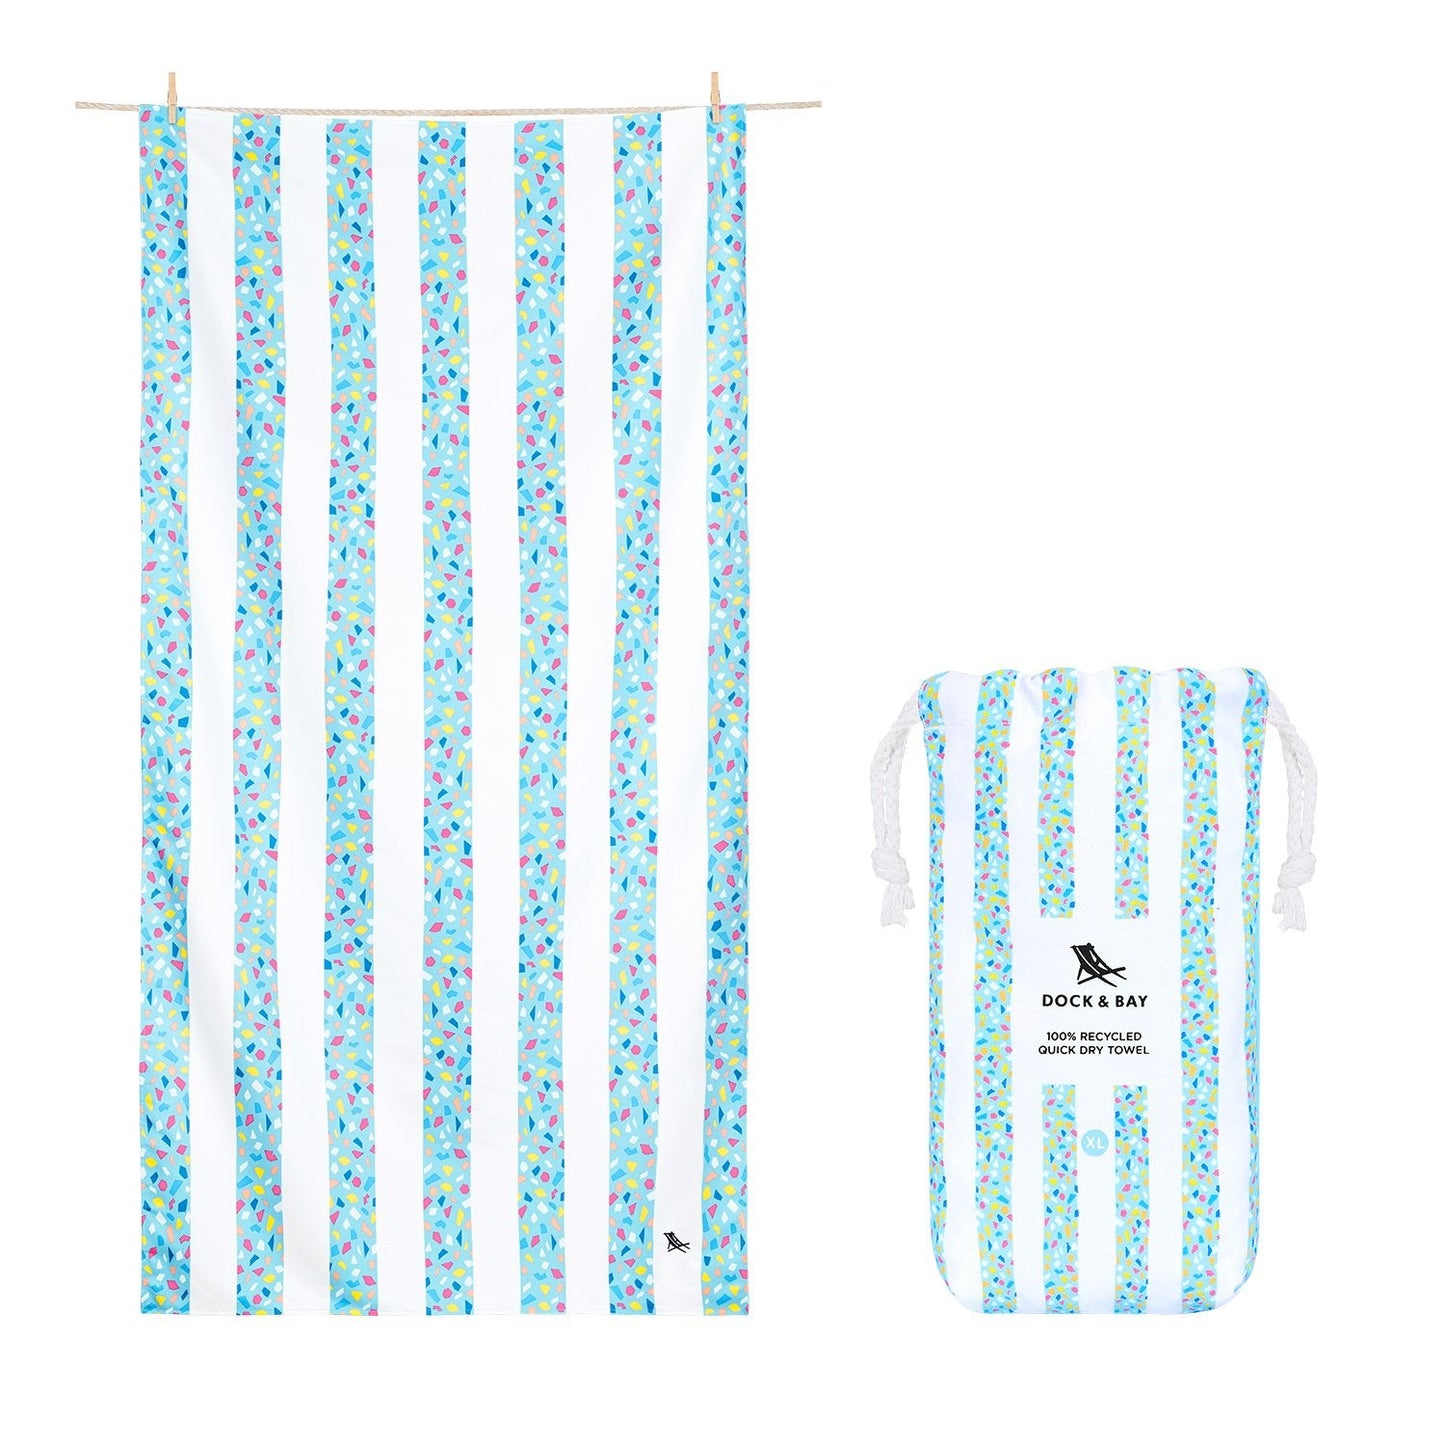 Dock & Bay Towels - Celebrations - Confetti Cannon - XL